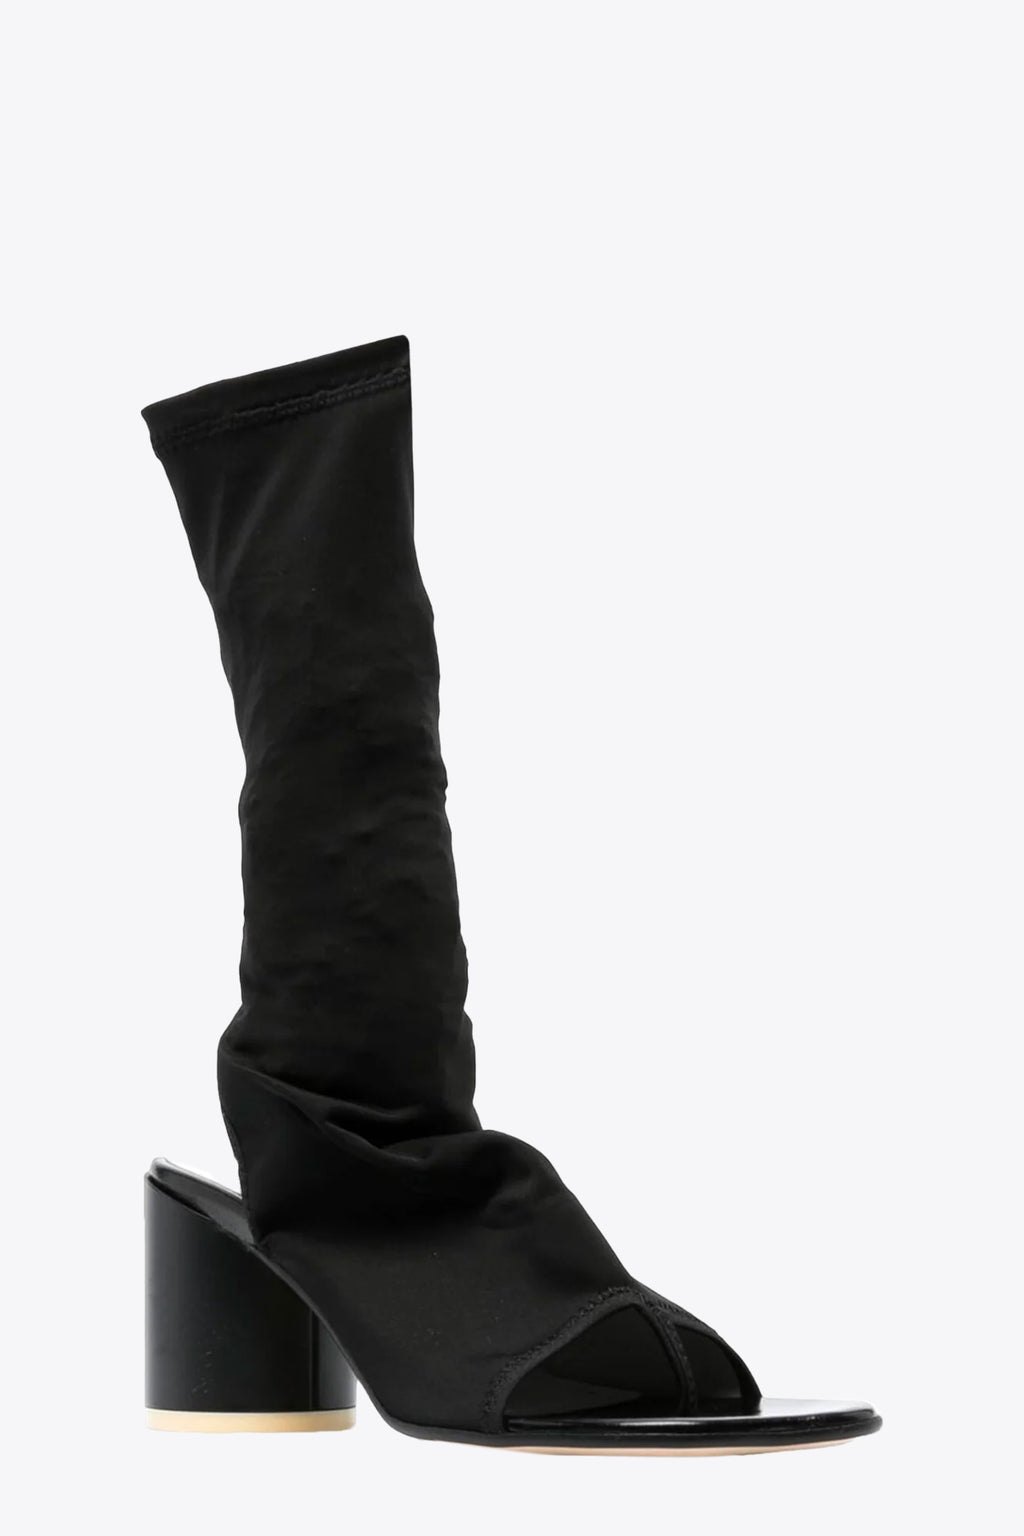 alt-image__Open-toe-black-stretch-lycra-heeled-boots